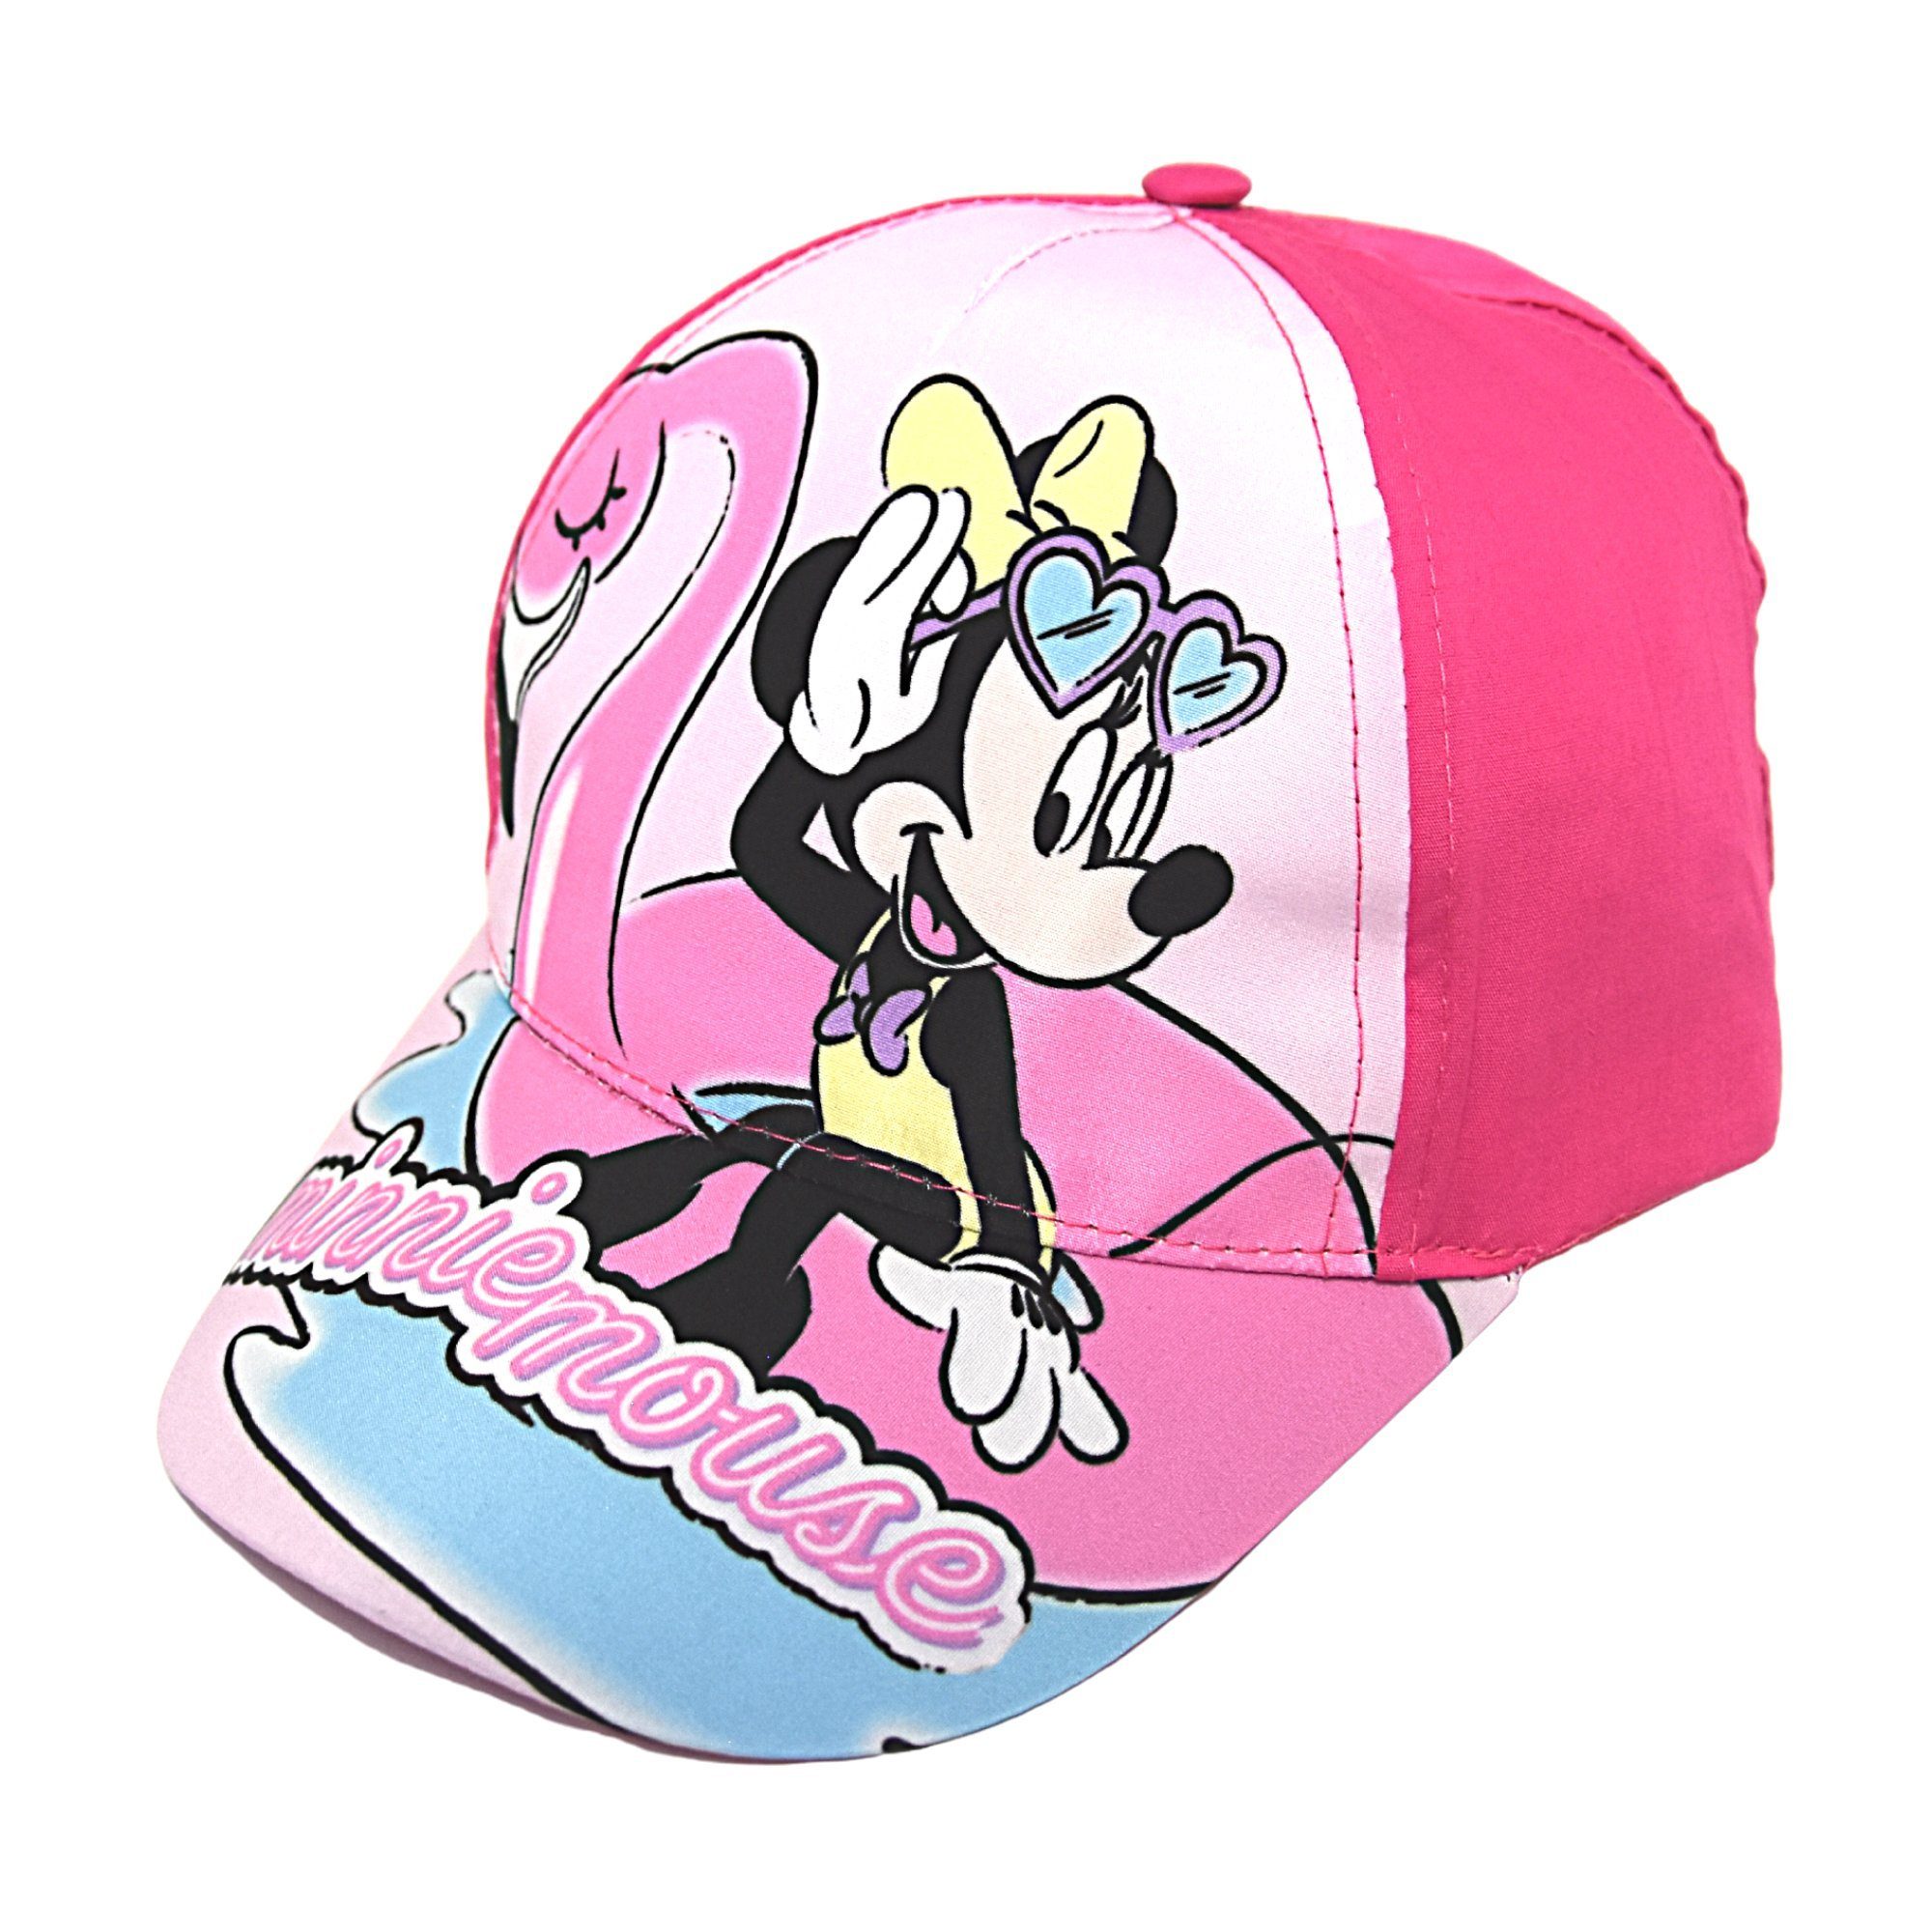 Disney Minnie cm Sommerkappe 52-54 Mädchen & Maus Größe Mouse Baseball Cap Minnie Flamingo Pink